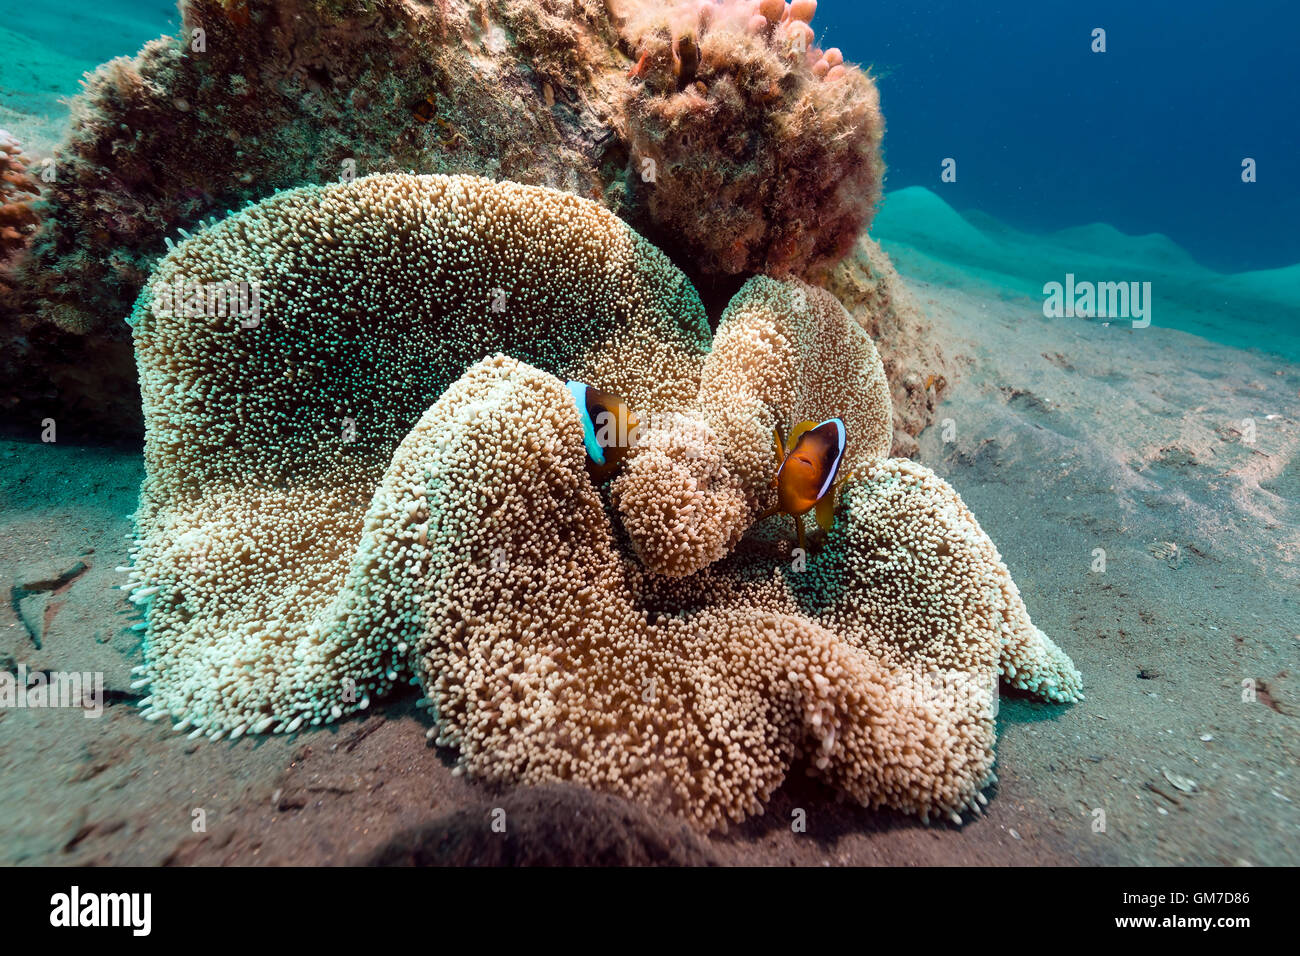 Haddon s anemone (stichodactyla haddoni) in the Red Sea. Stock Photo